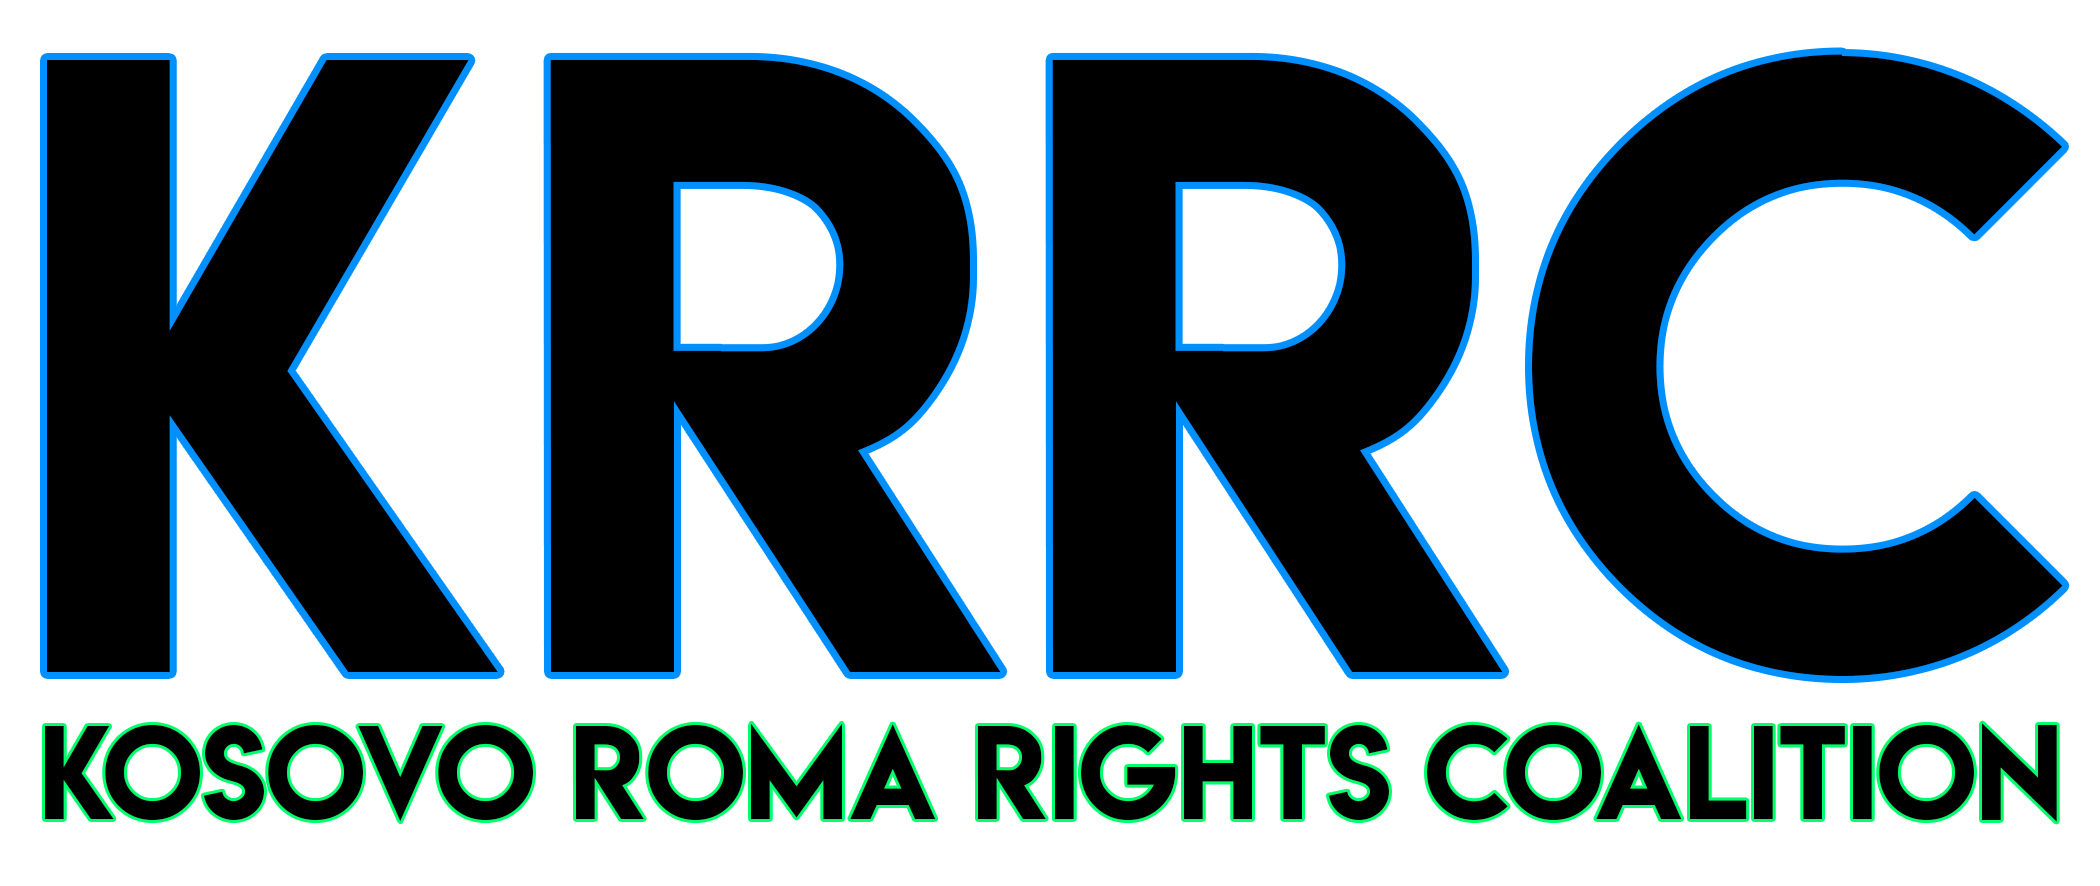 Kosovo Roma Rights Coalition (KRRC) 